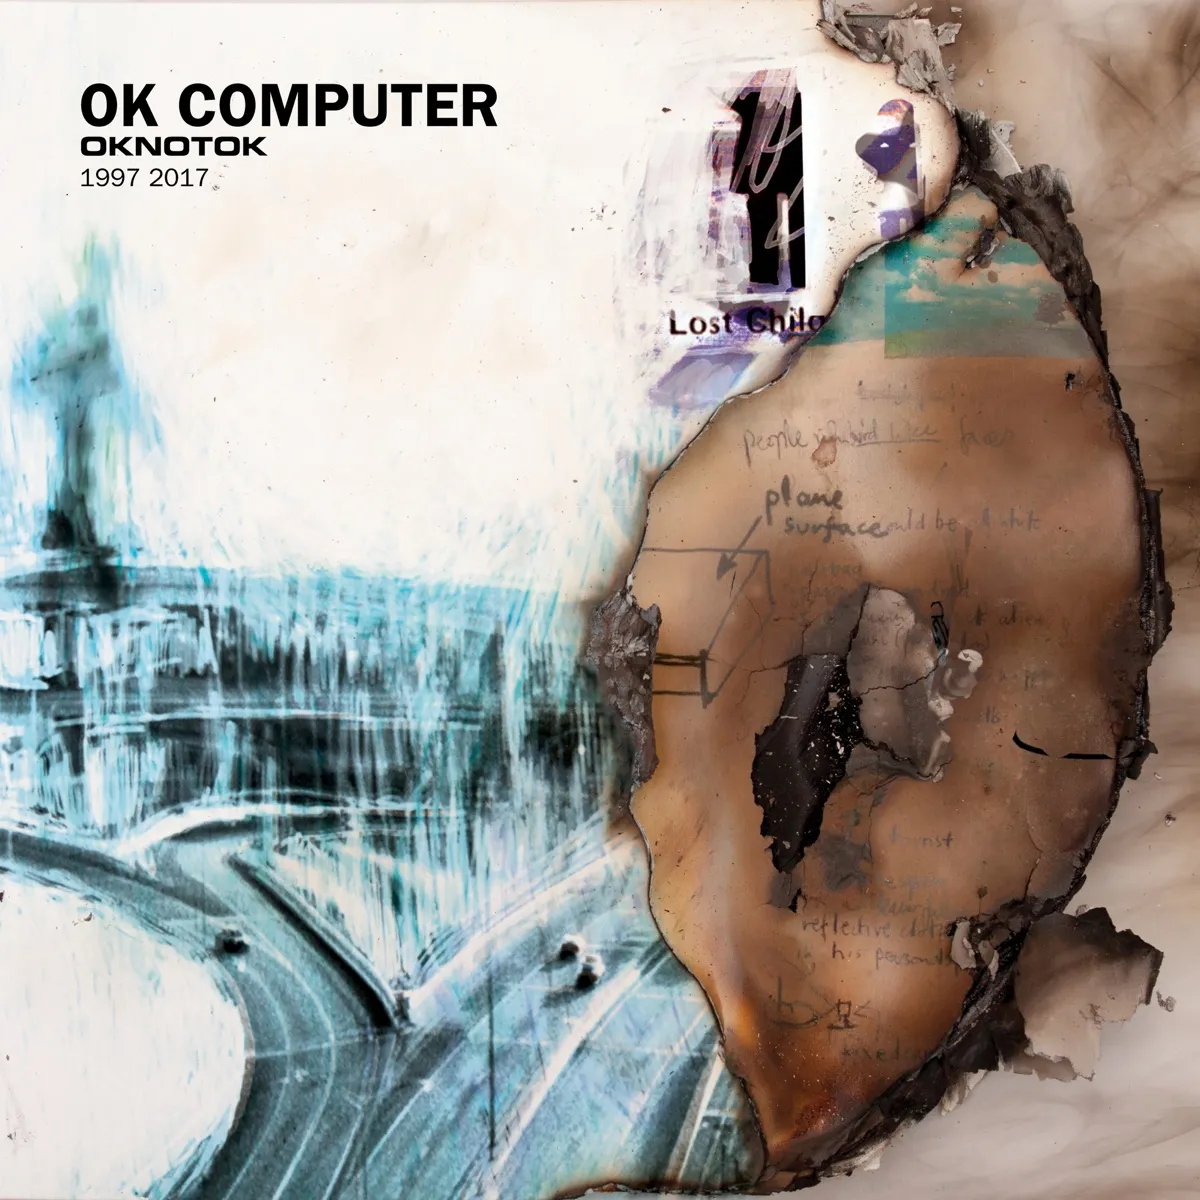 "Okay Computer: OKNOTOK 1997-2017" by Radiohead album cover